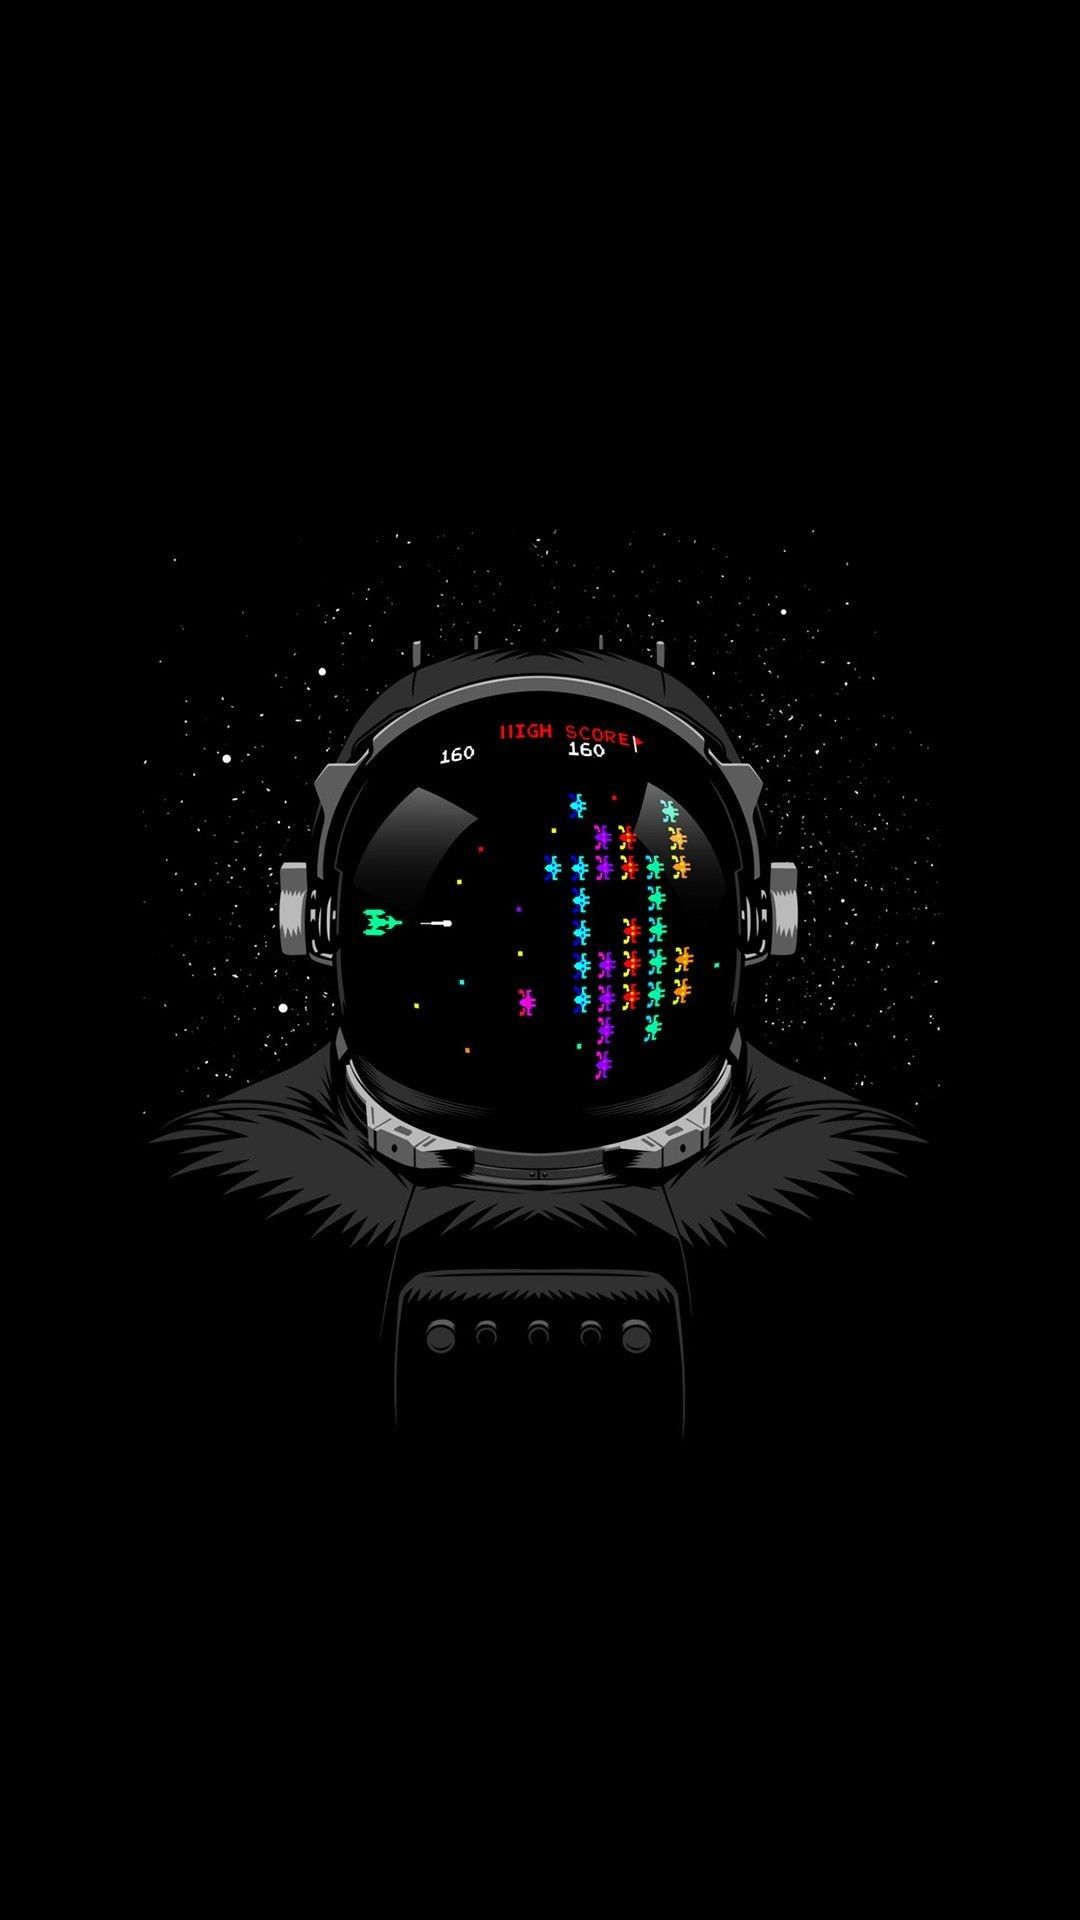 Space Invader Wallpaper